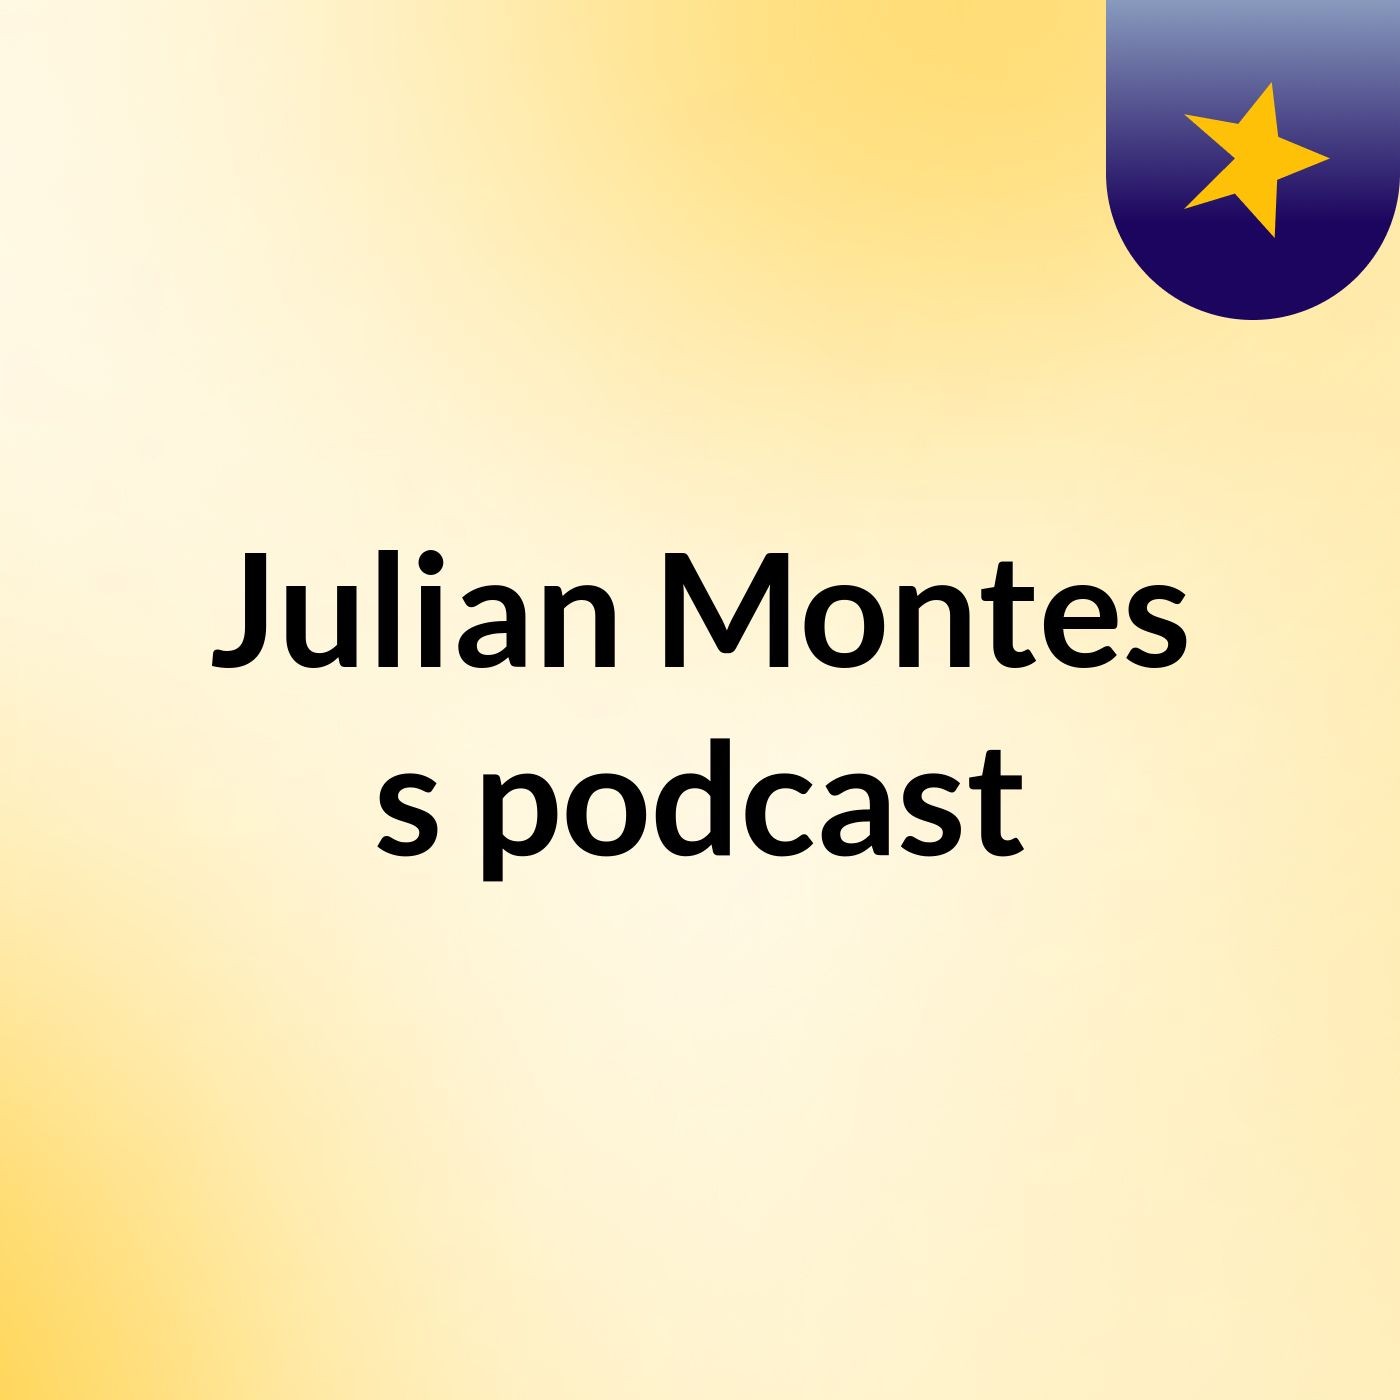 Episode 2 - Julian Montes's podcast